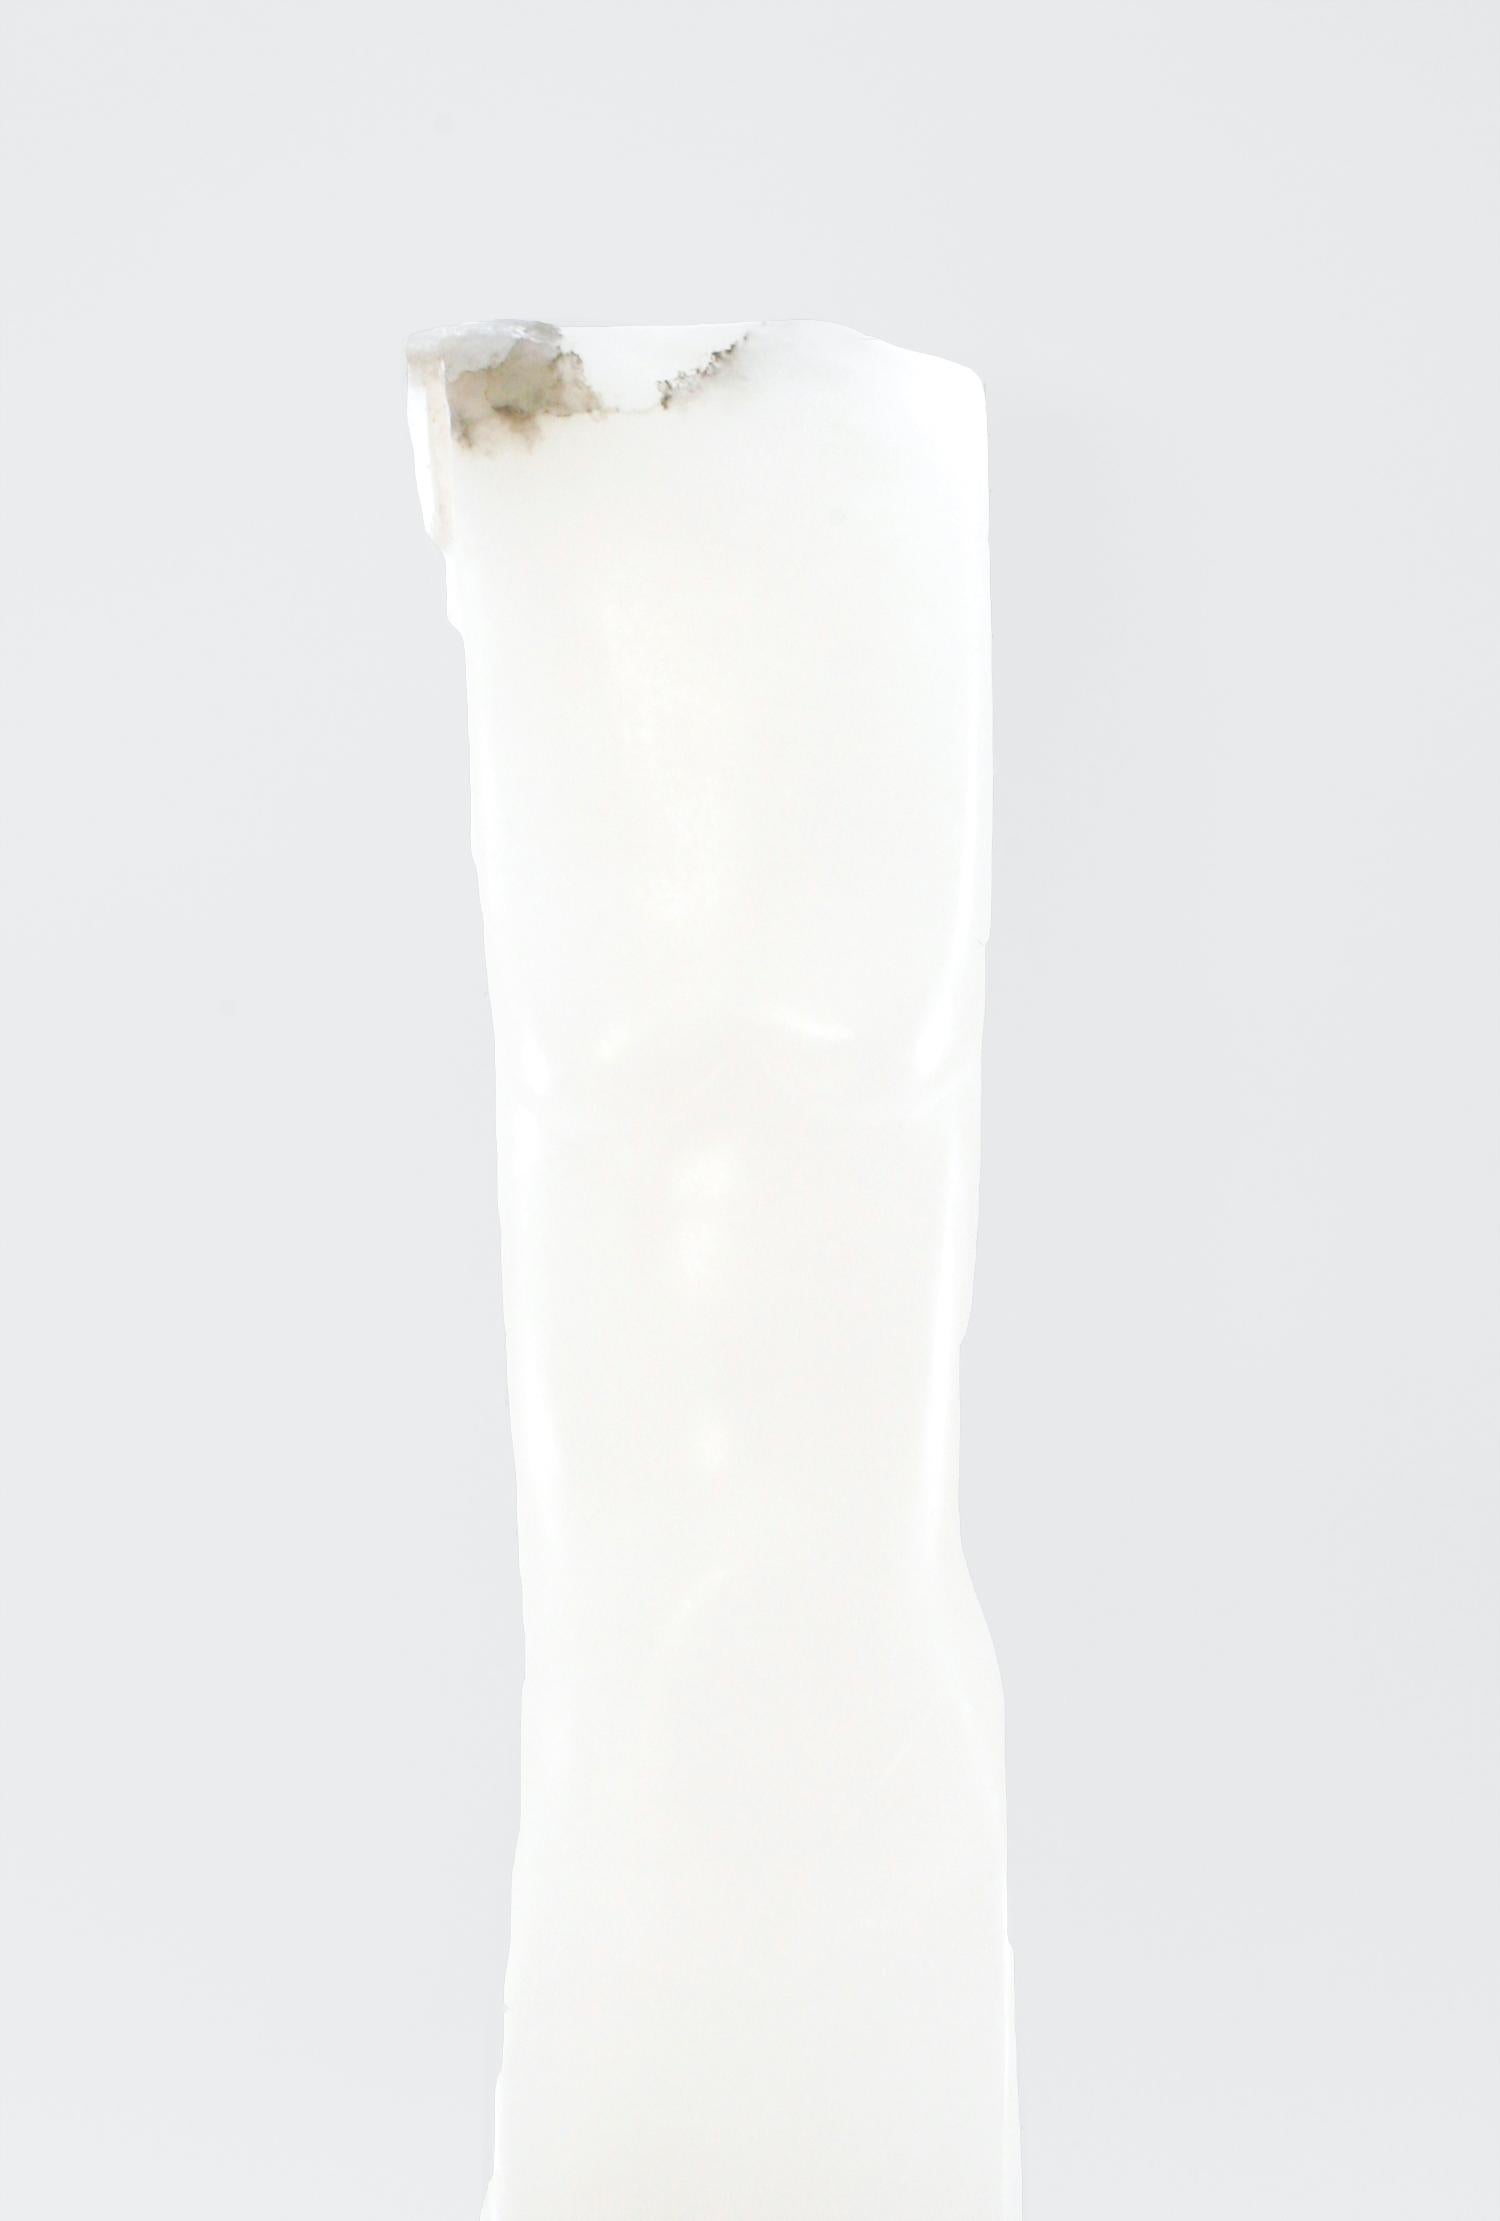 American Wendy Hendelman Tall White Alabaster Torso Sculpture, 2018 For Sale